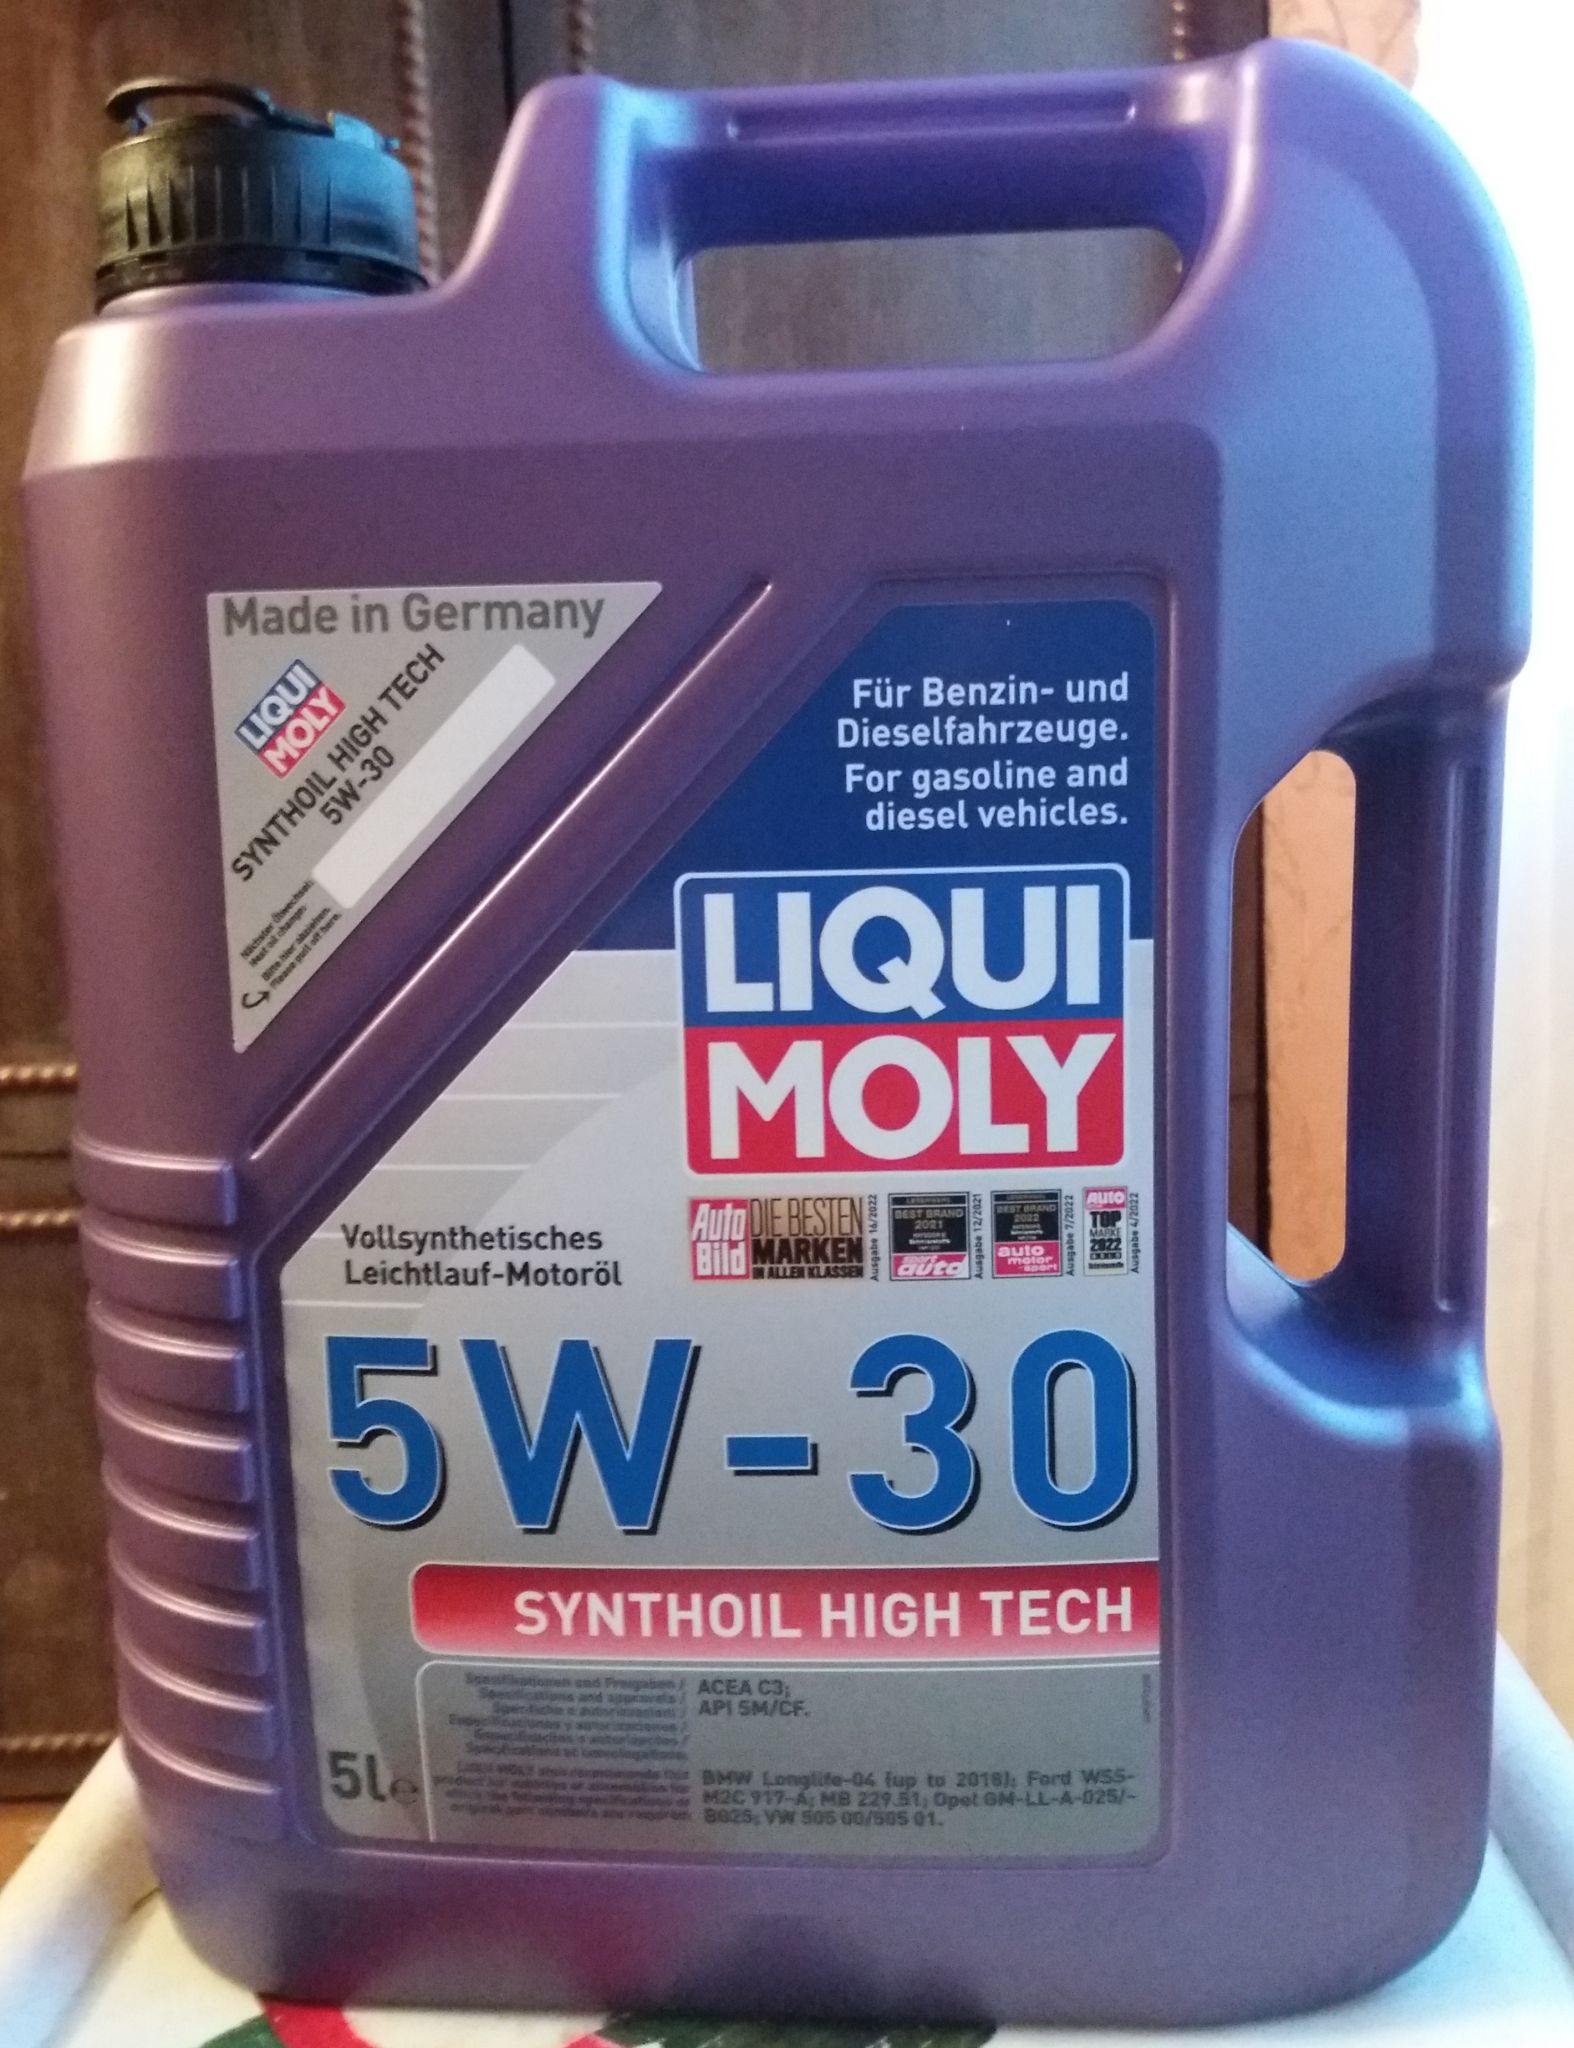 Масло liqui moly synthoil high. Moly Synthoil High Tech 5w/30, артикул: 9076. Масло Ликви моли детальная фото.